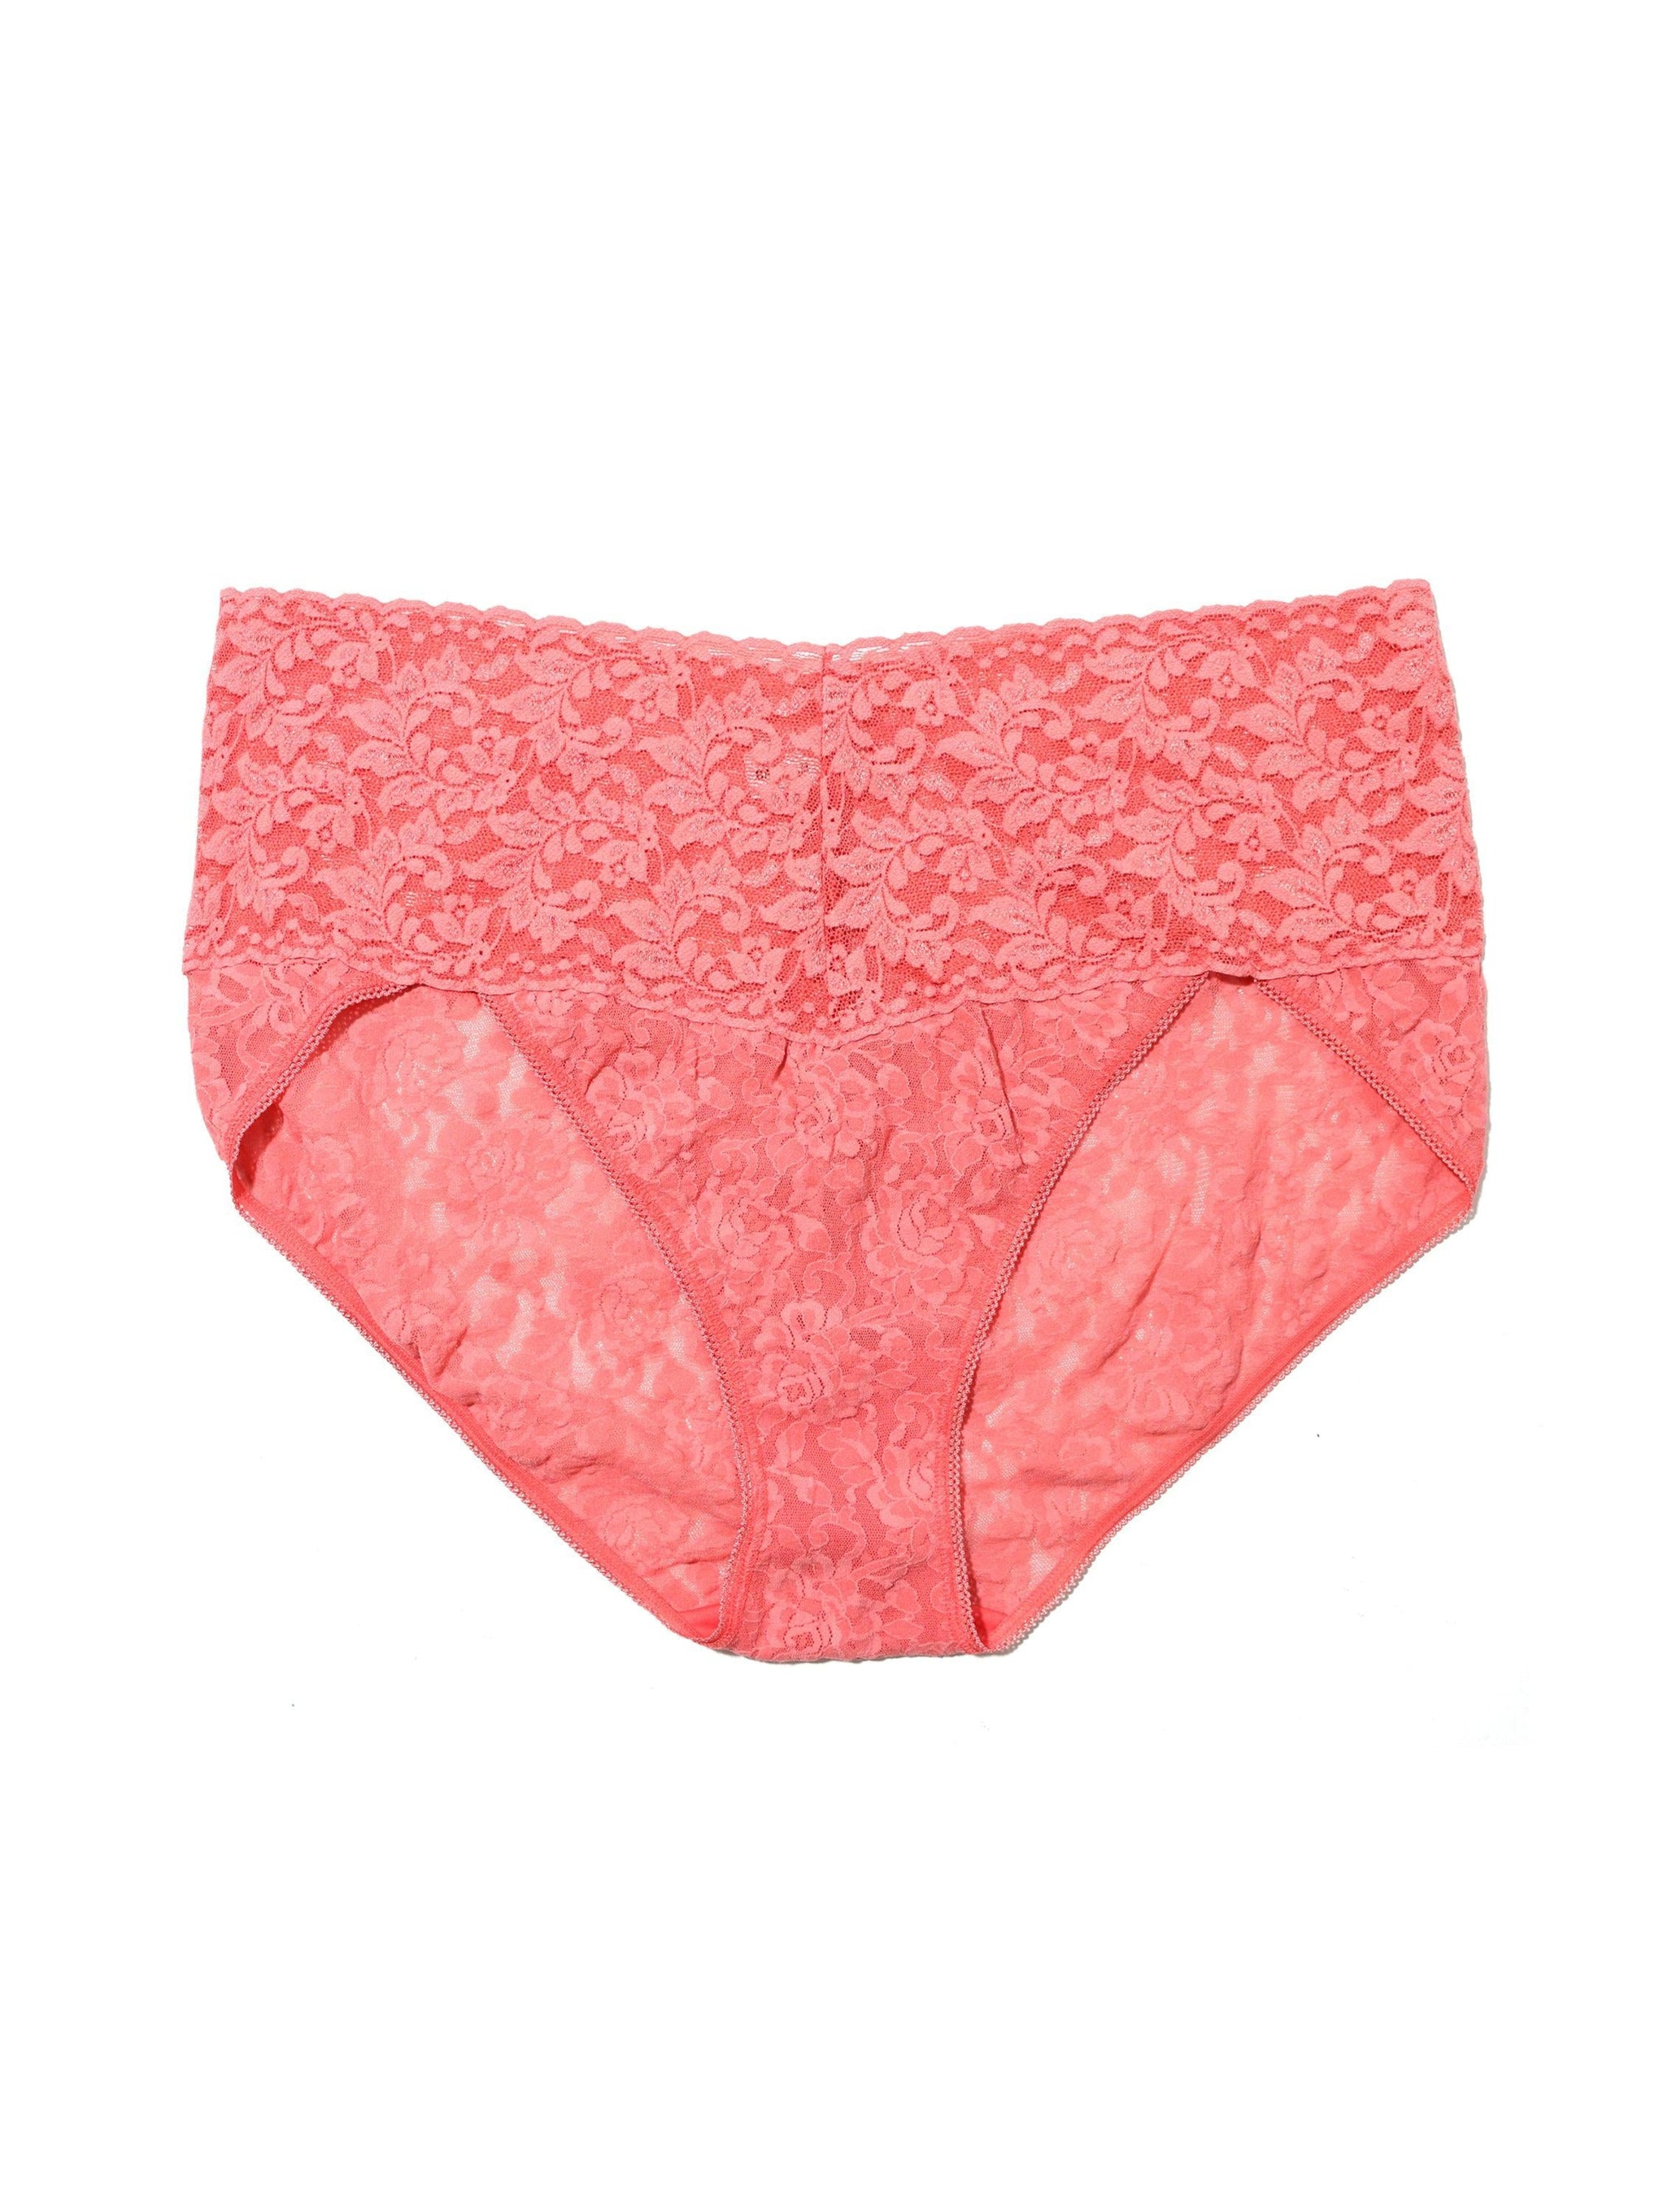 Plus Size Retro Lace V-kini Guava Pink Sale